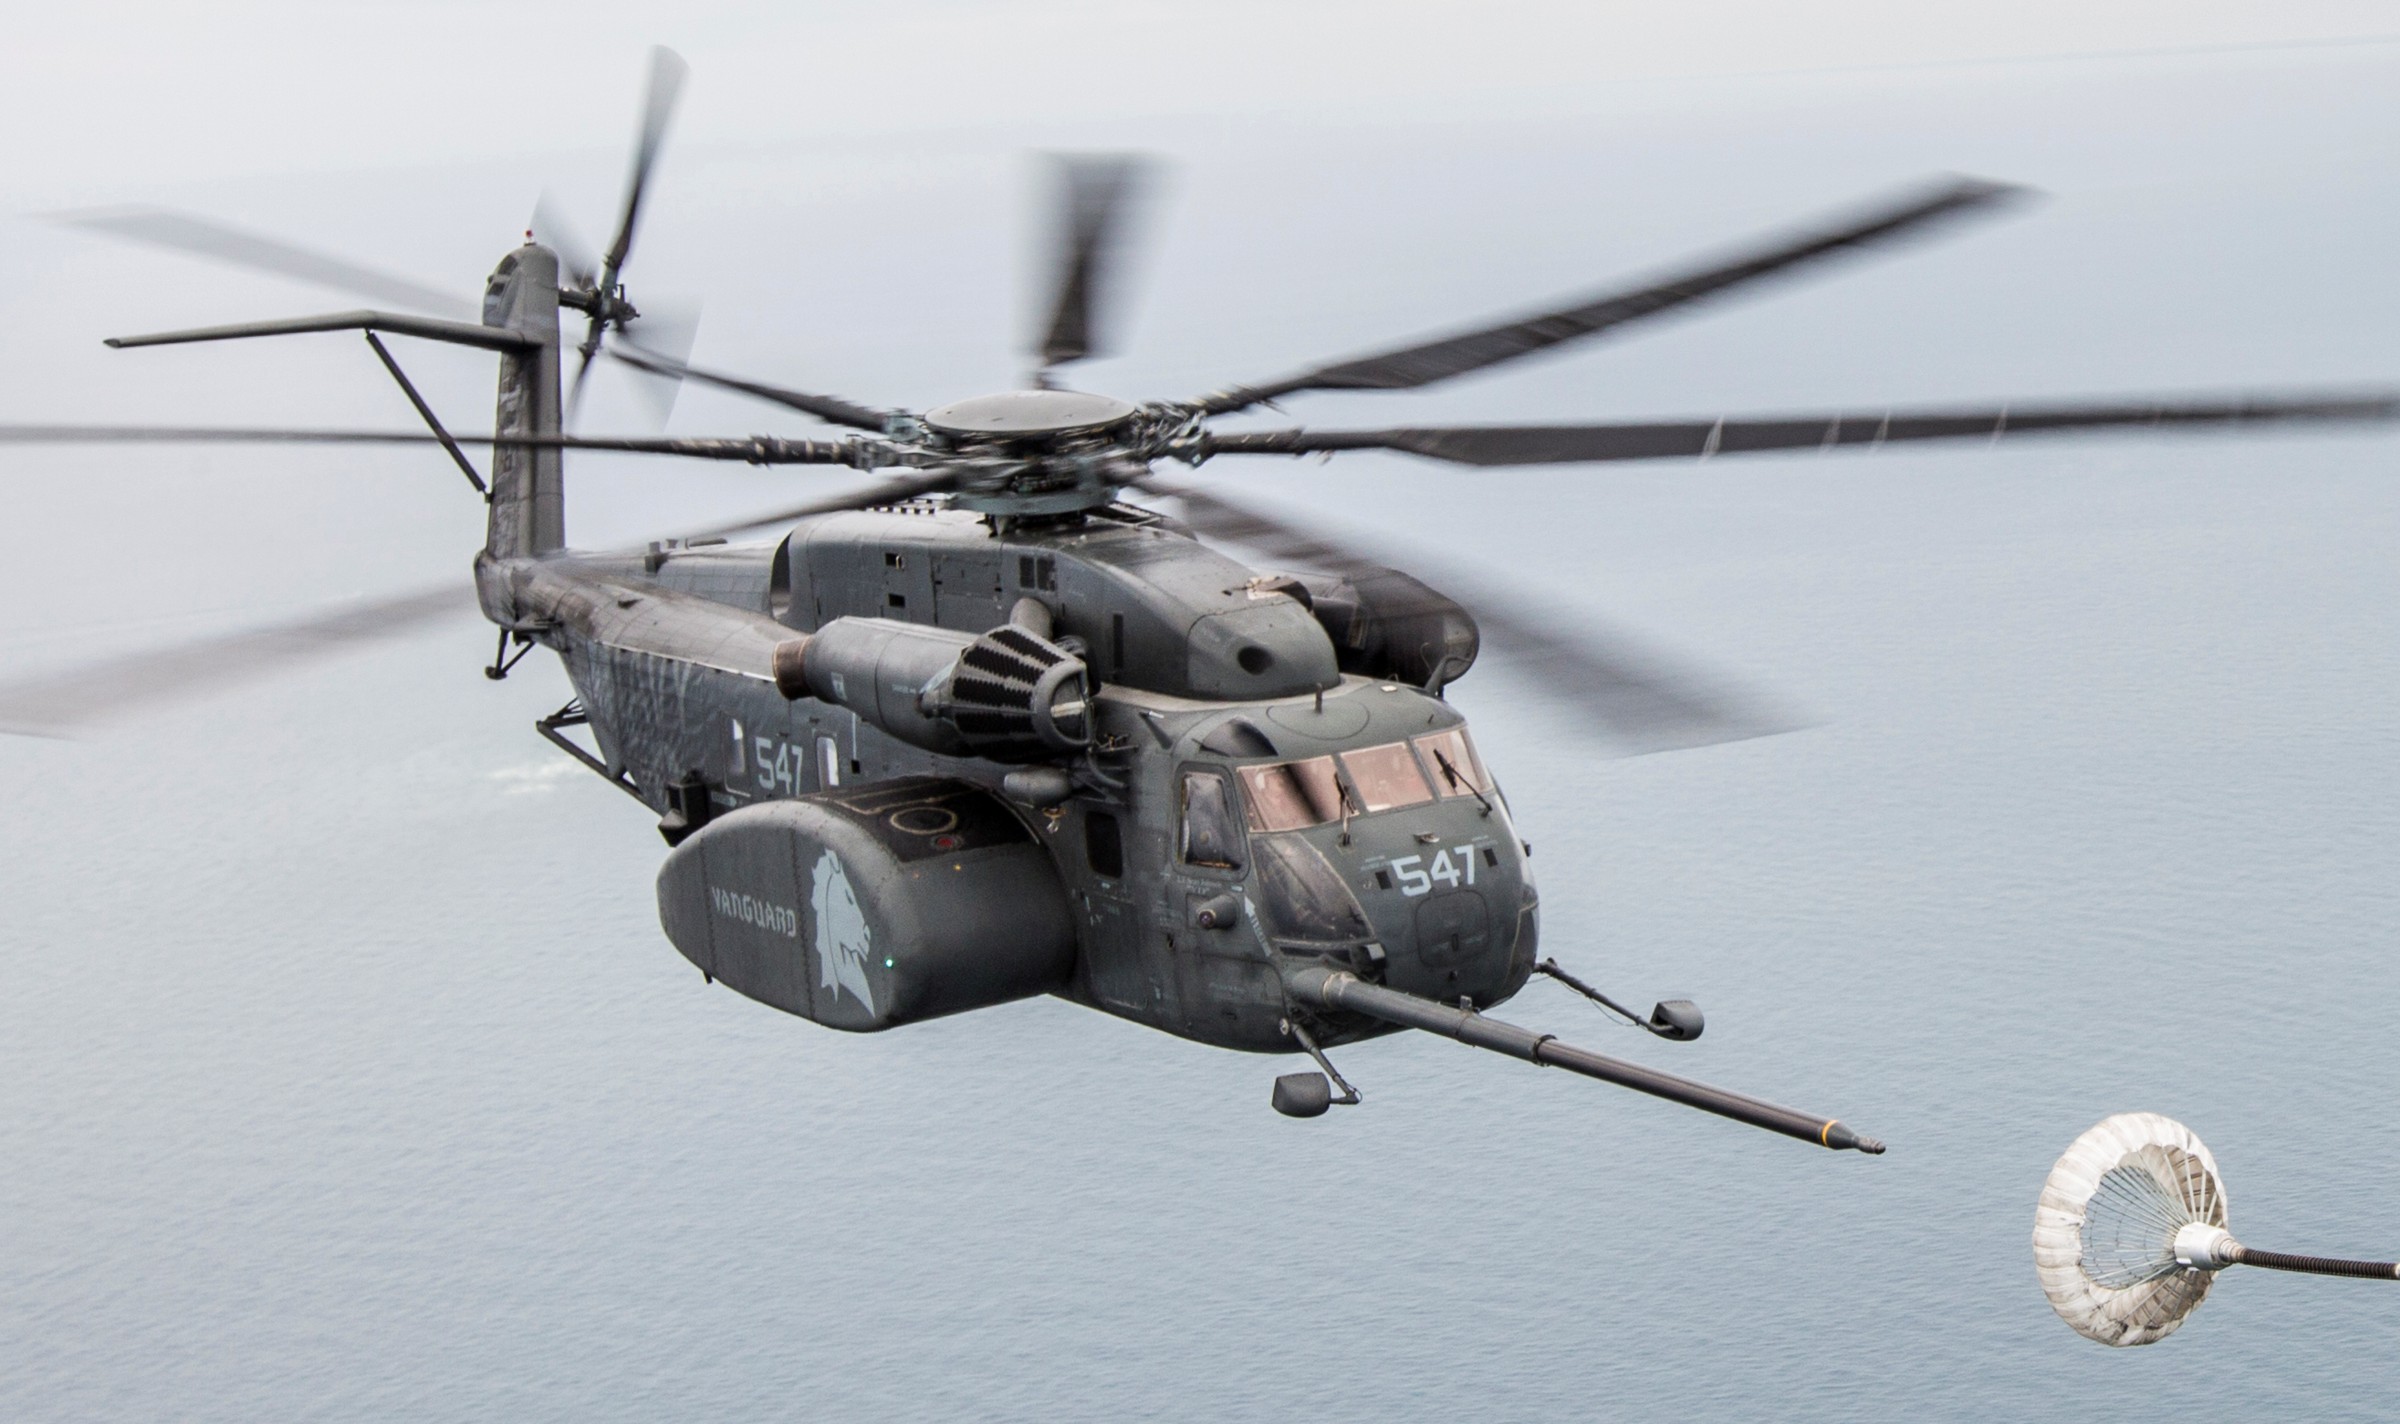 hm-14 vanguard helicopter mine countermeasures squadron navy mh-53e sea dragon 13